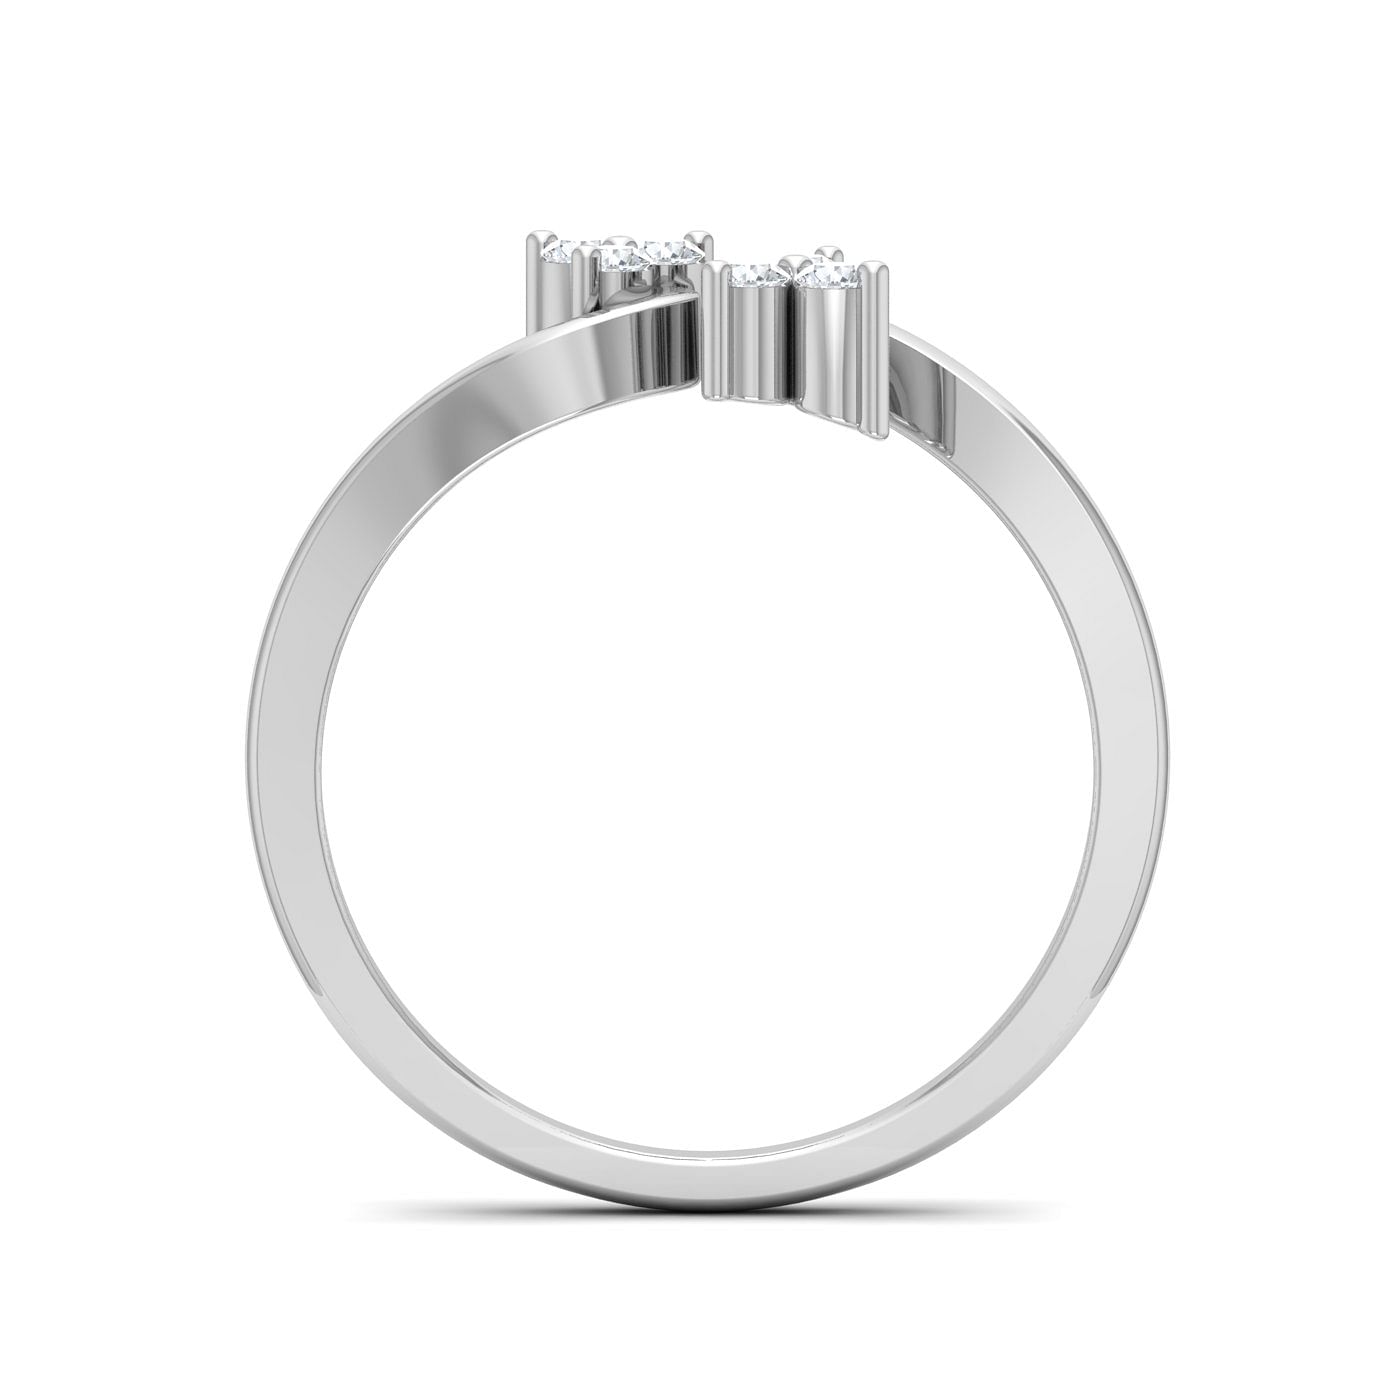 Office Wear White Gold Diamond Ring For Working Women